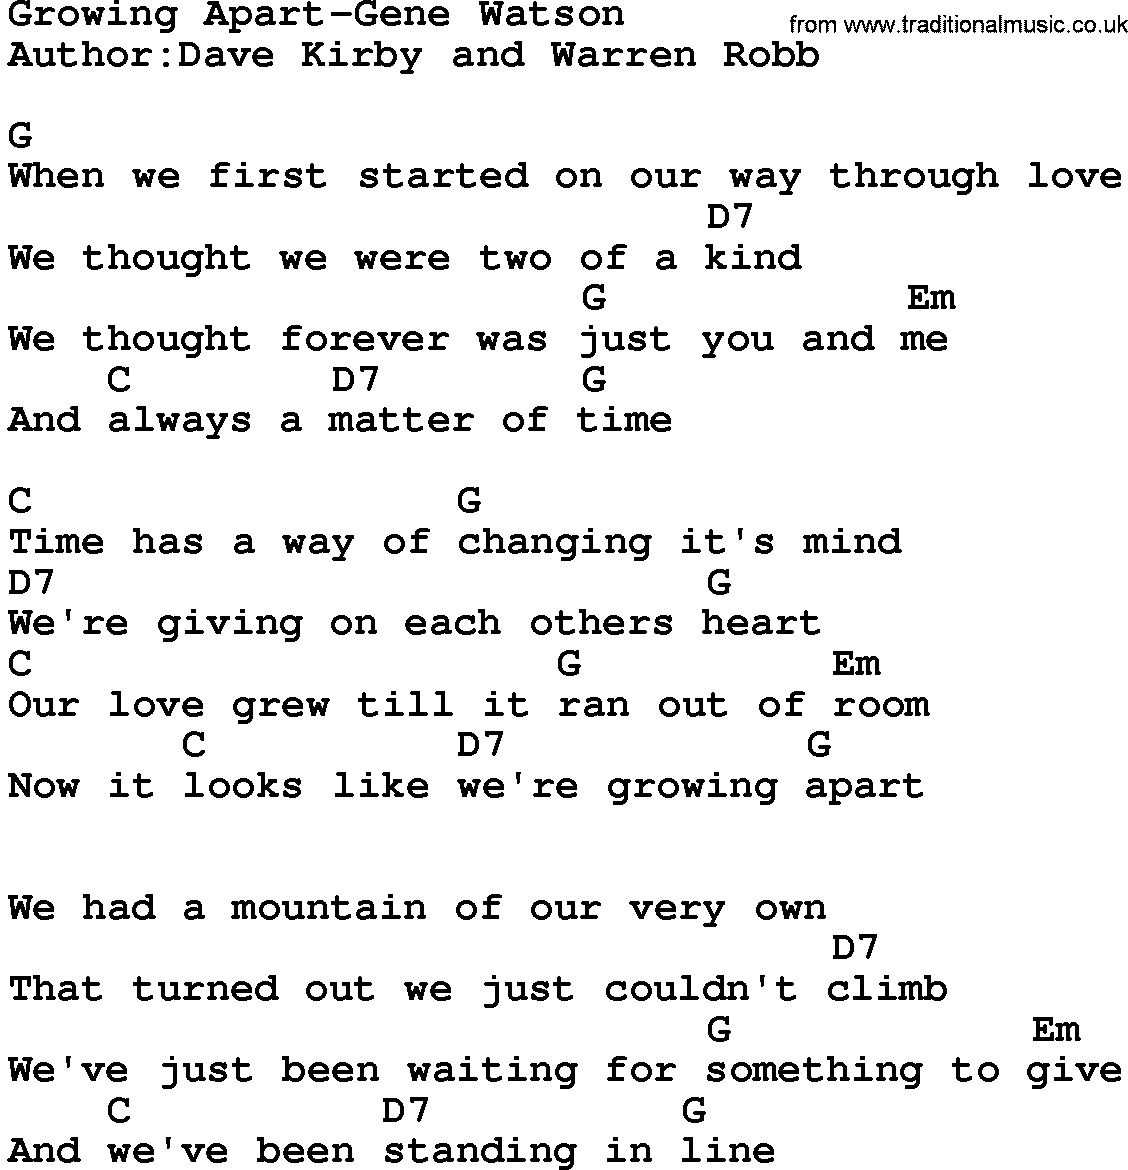 Country music song: Growing Apart-Gene Watson lyrics and chords